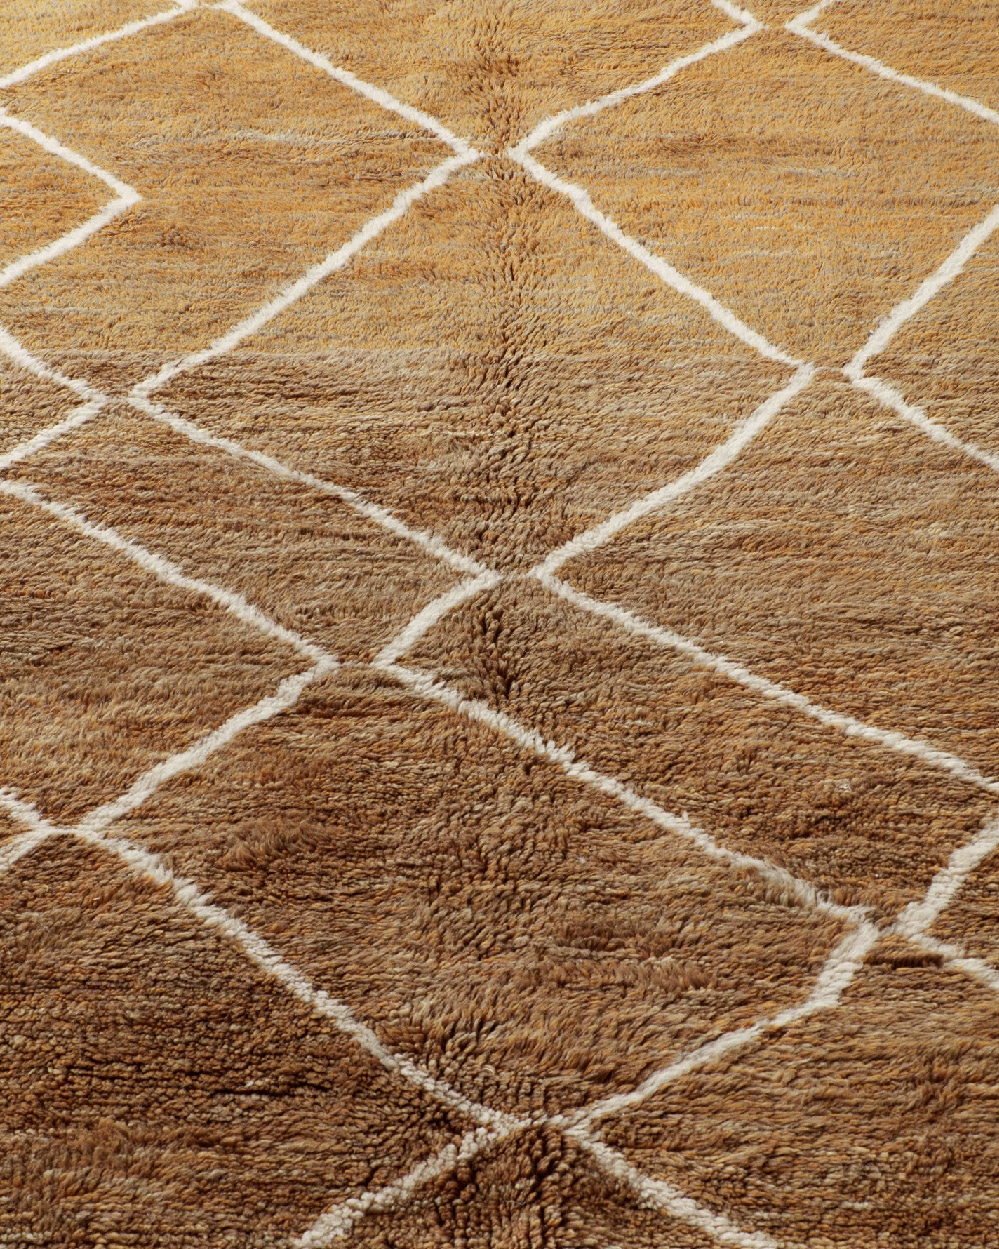 Mrirt rug in autumn tones, detail